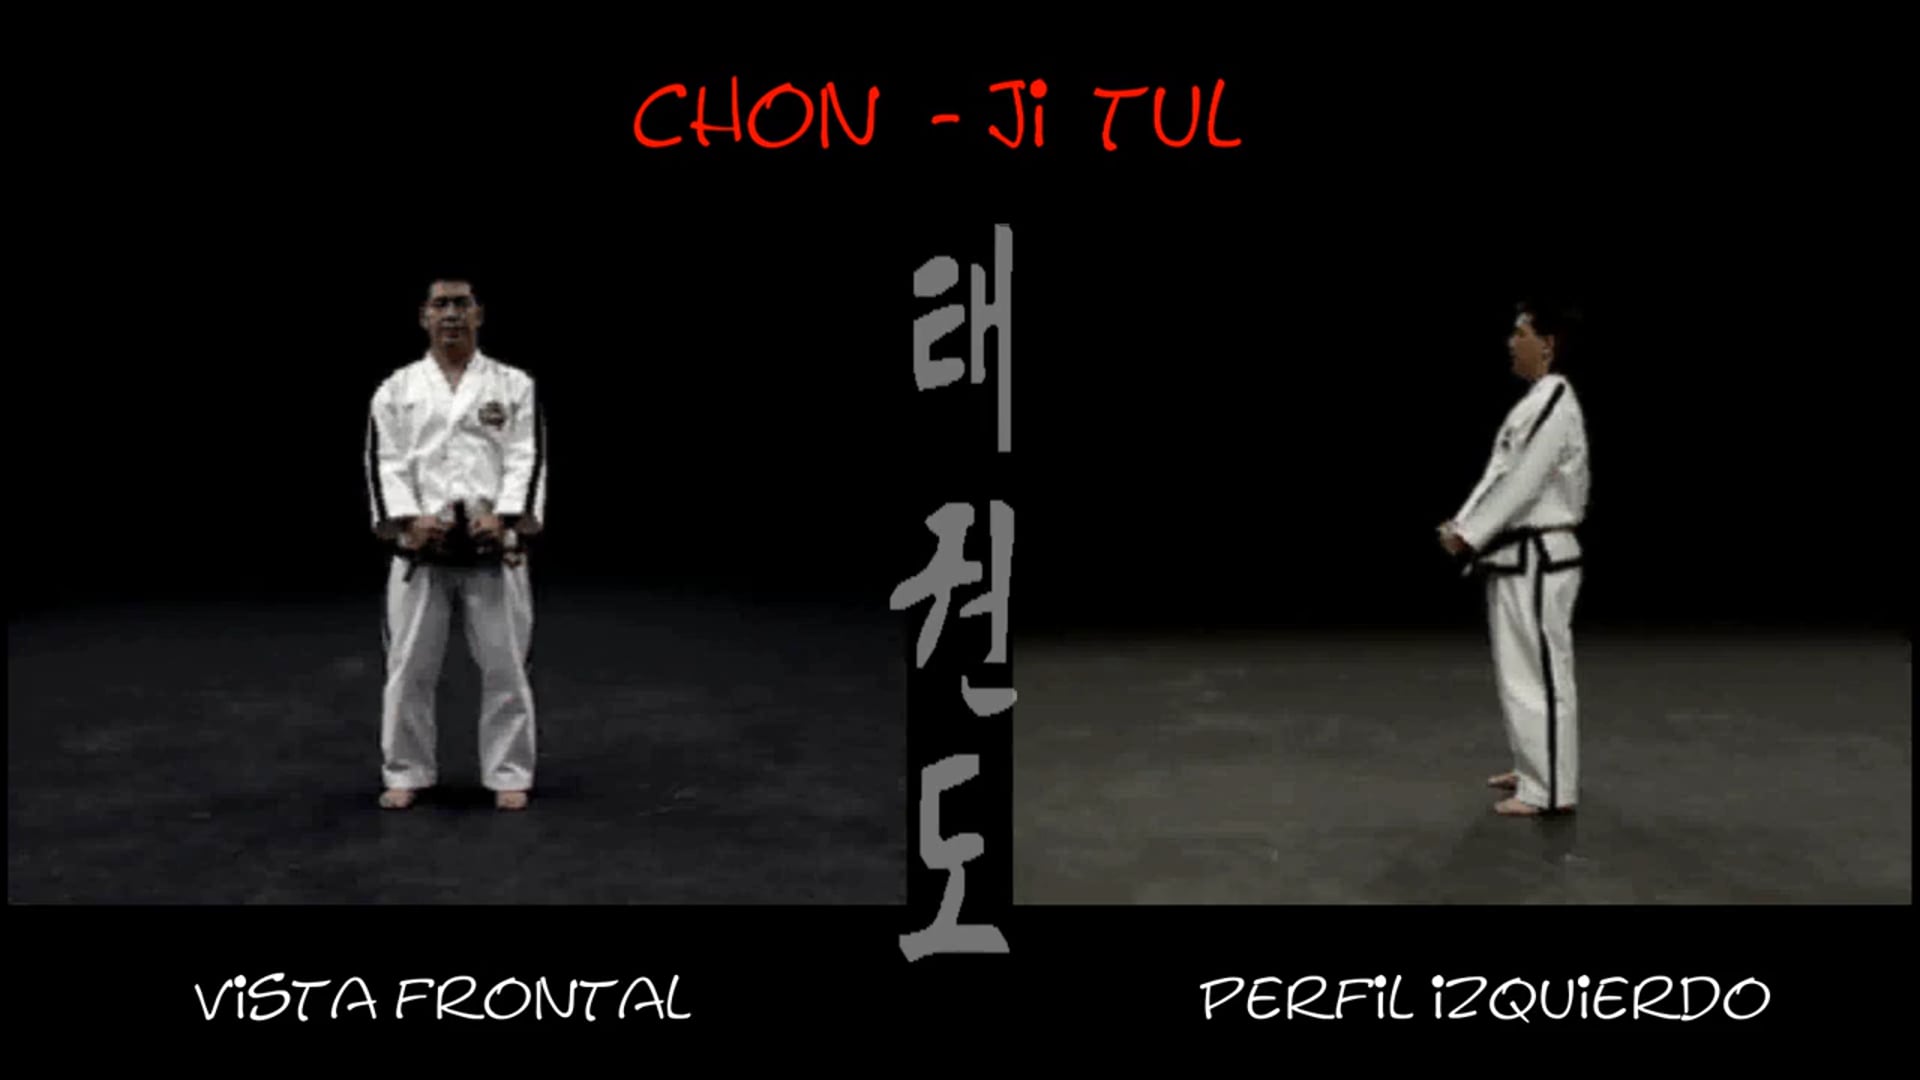 Chon-Ji Tul